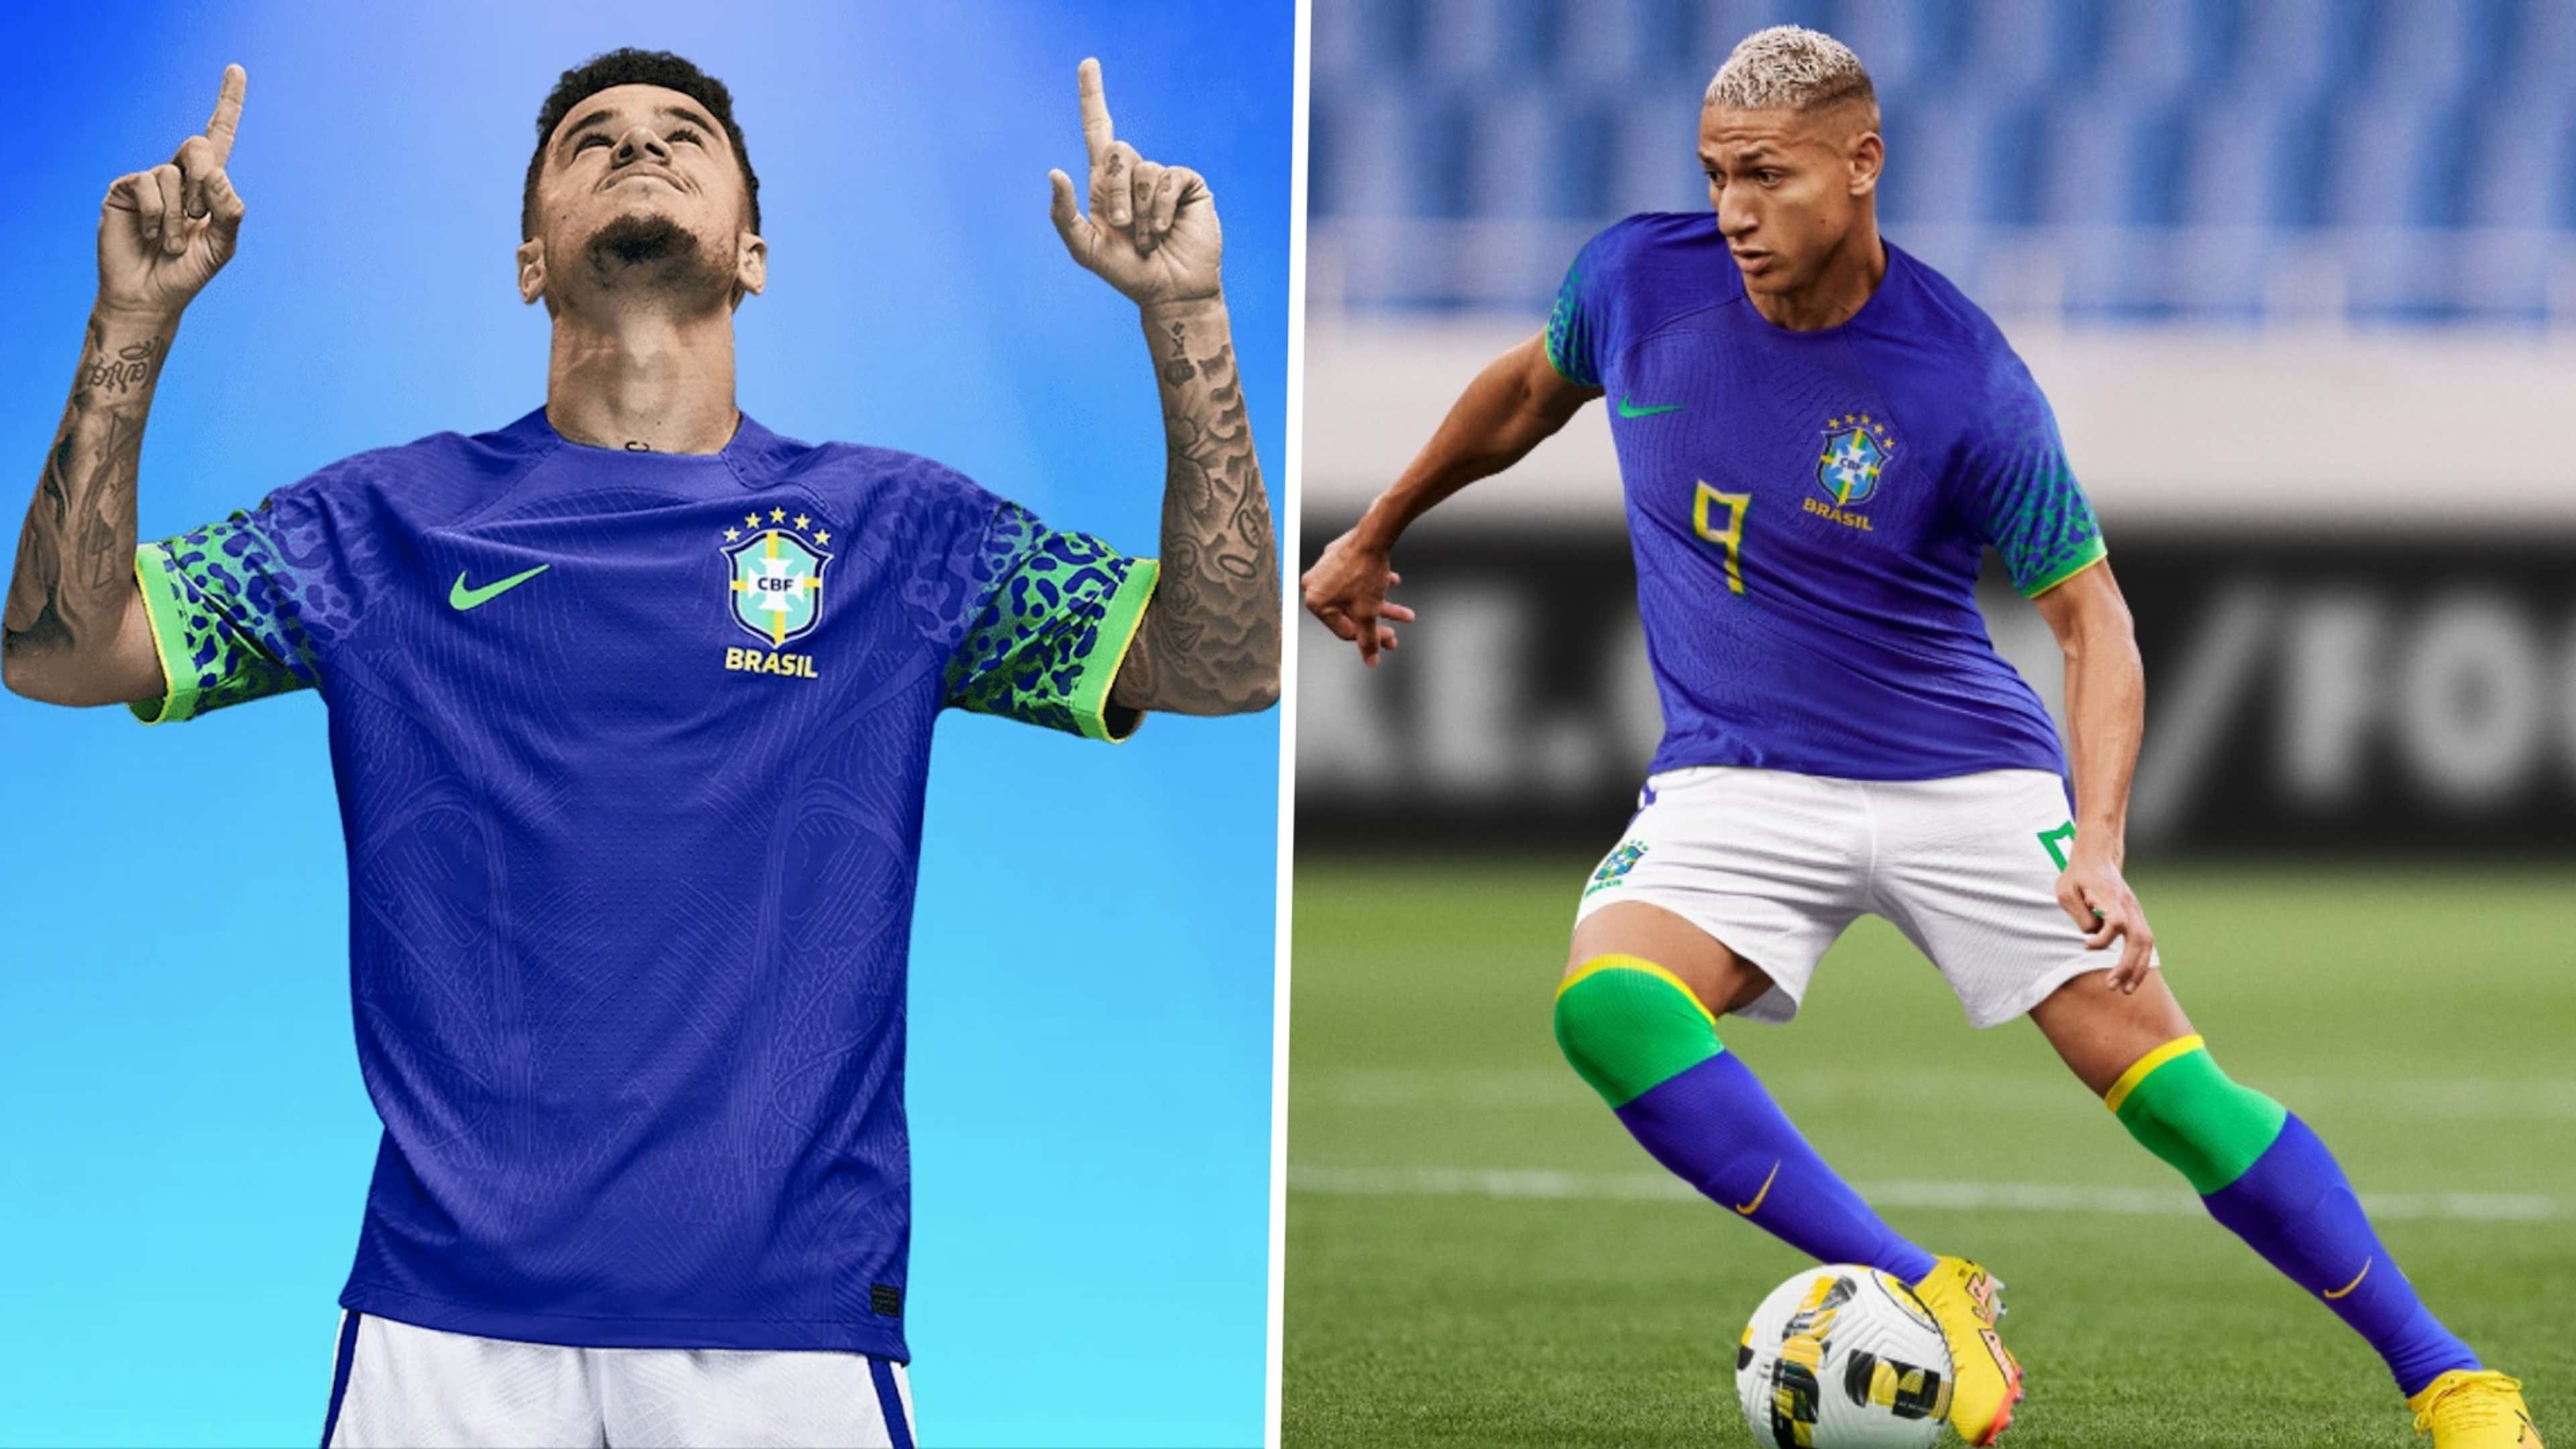 Brasilien 2022 WM Heimtrikots Gelb Trikotsatz Kurzarm + Kurze